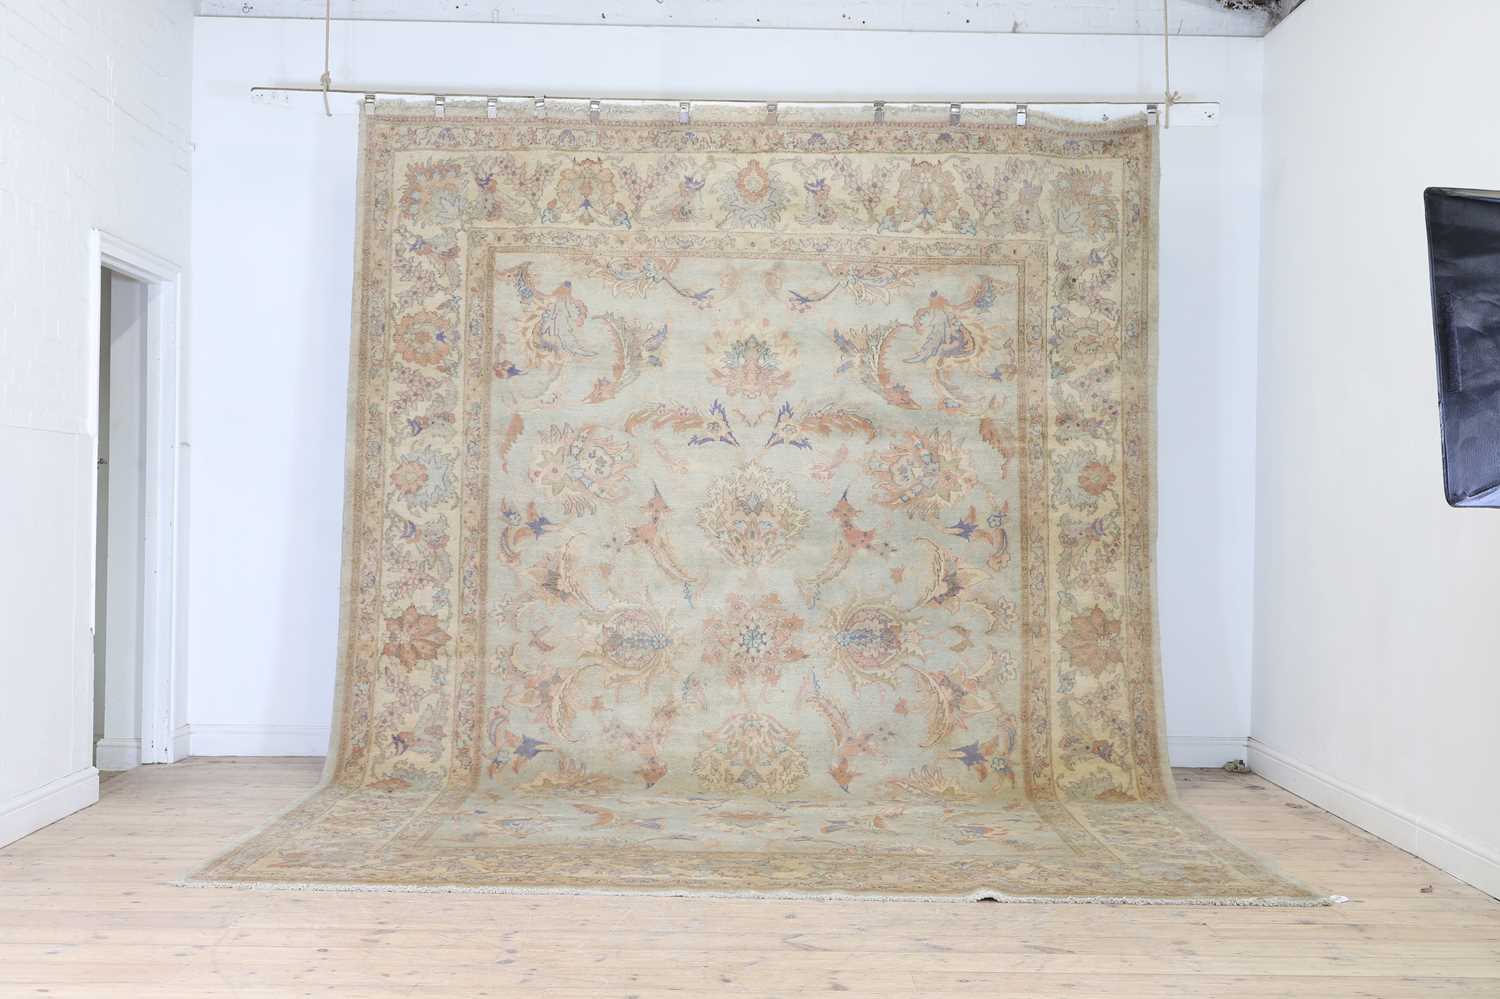 A Ziegler Mahal style carpet,